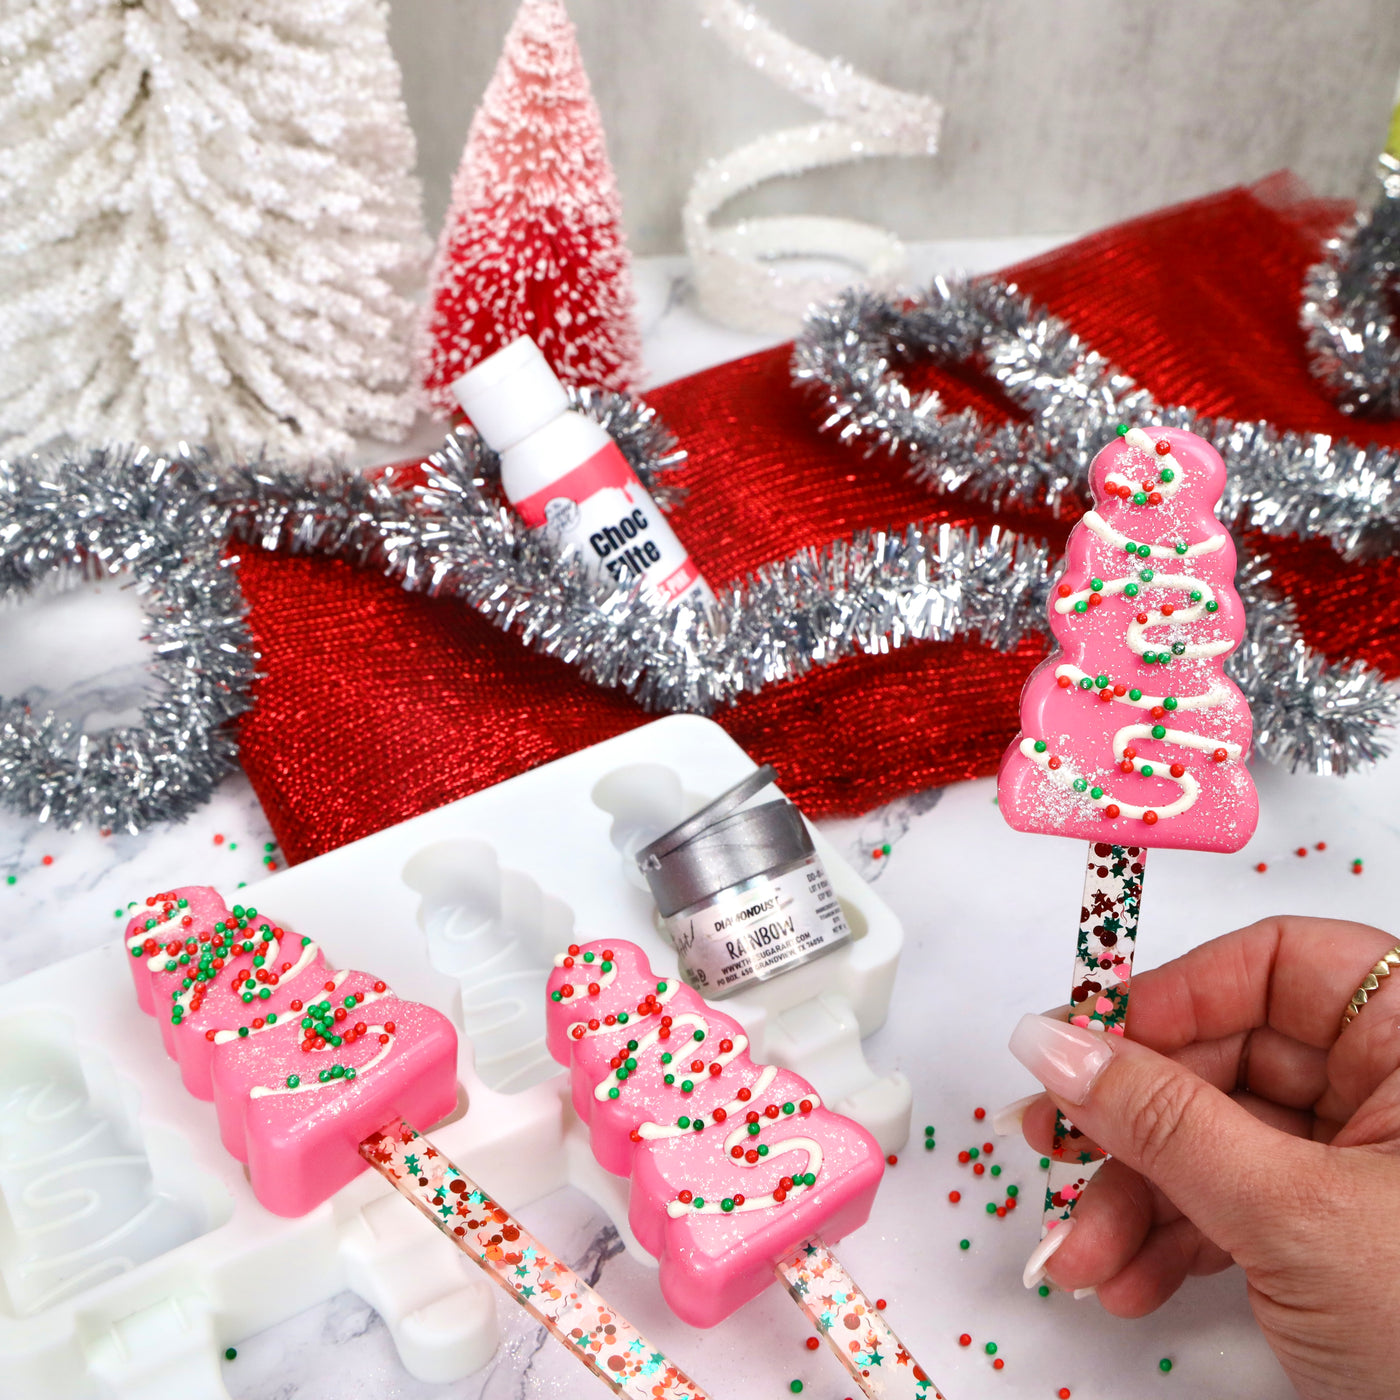 24 Christmas Glitter Popsicle Sticks - The Sugar Art, Inc.